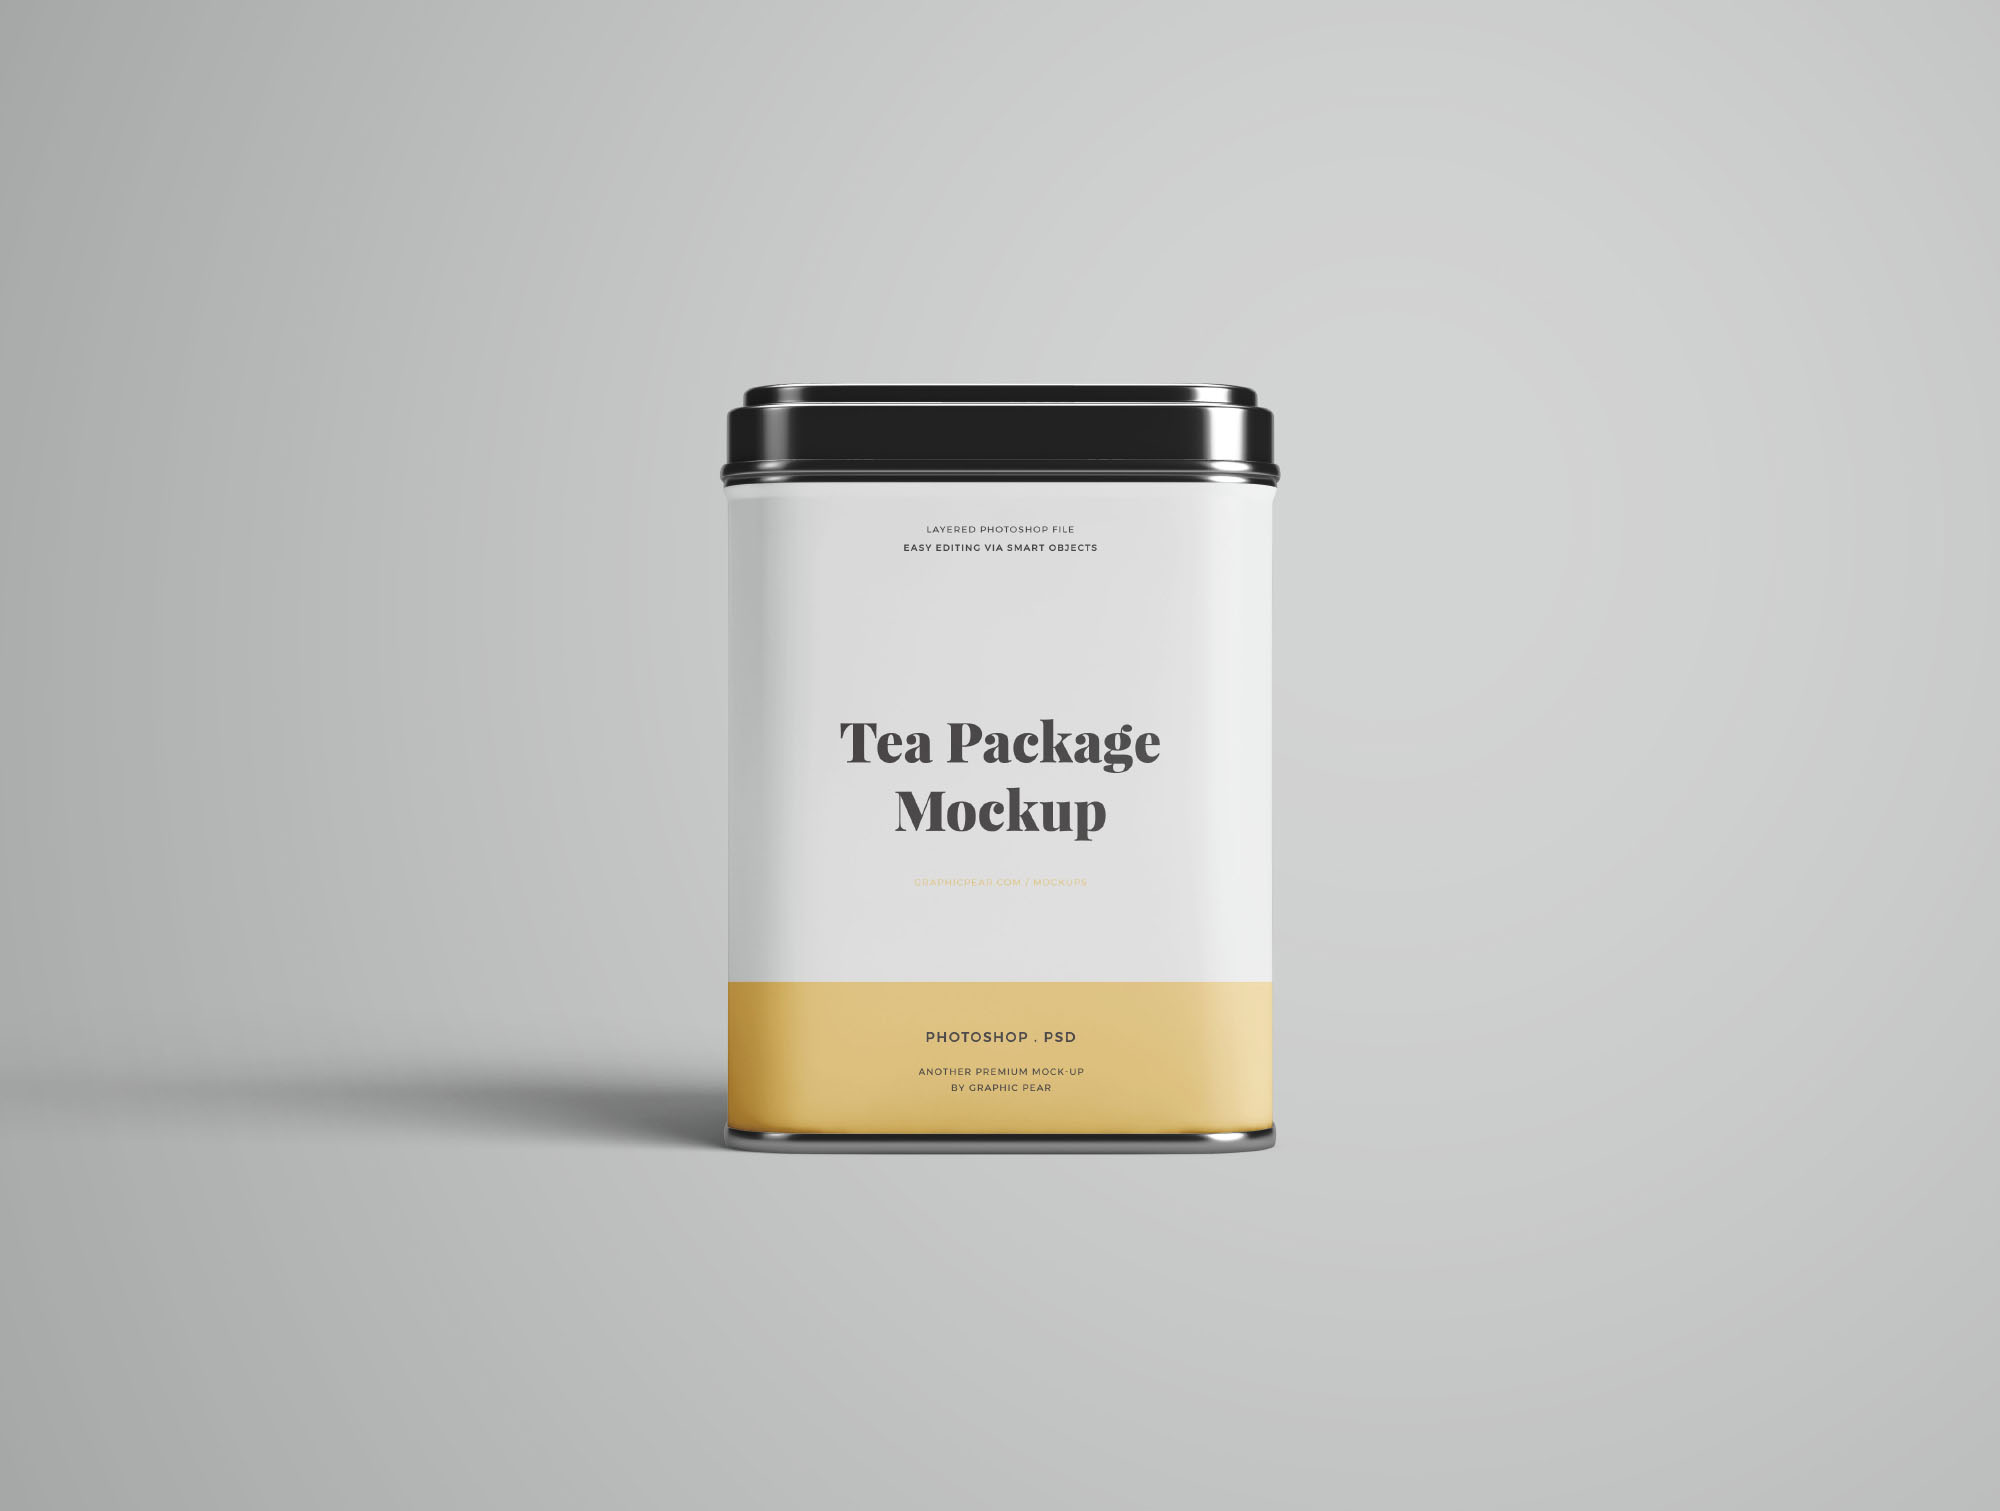 茶叶铁盒包装设计效果样机 Tea Package Mockup插图(2)